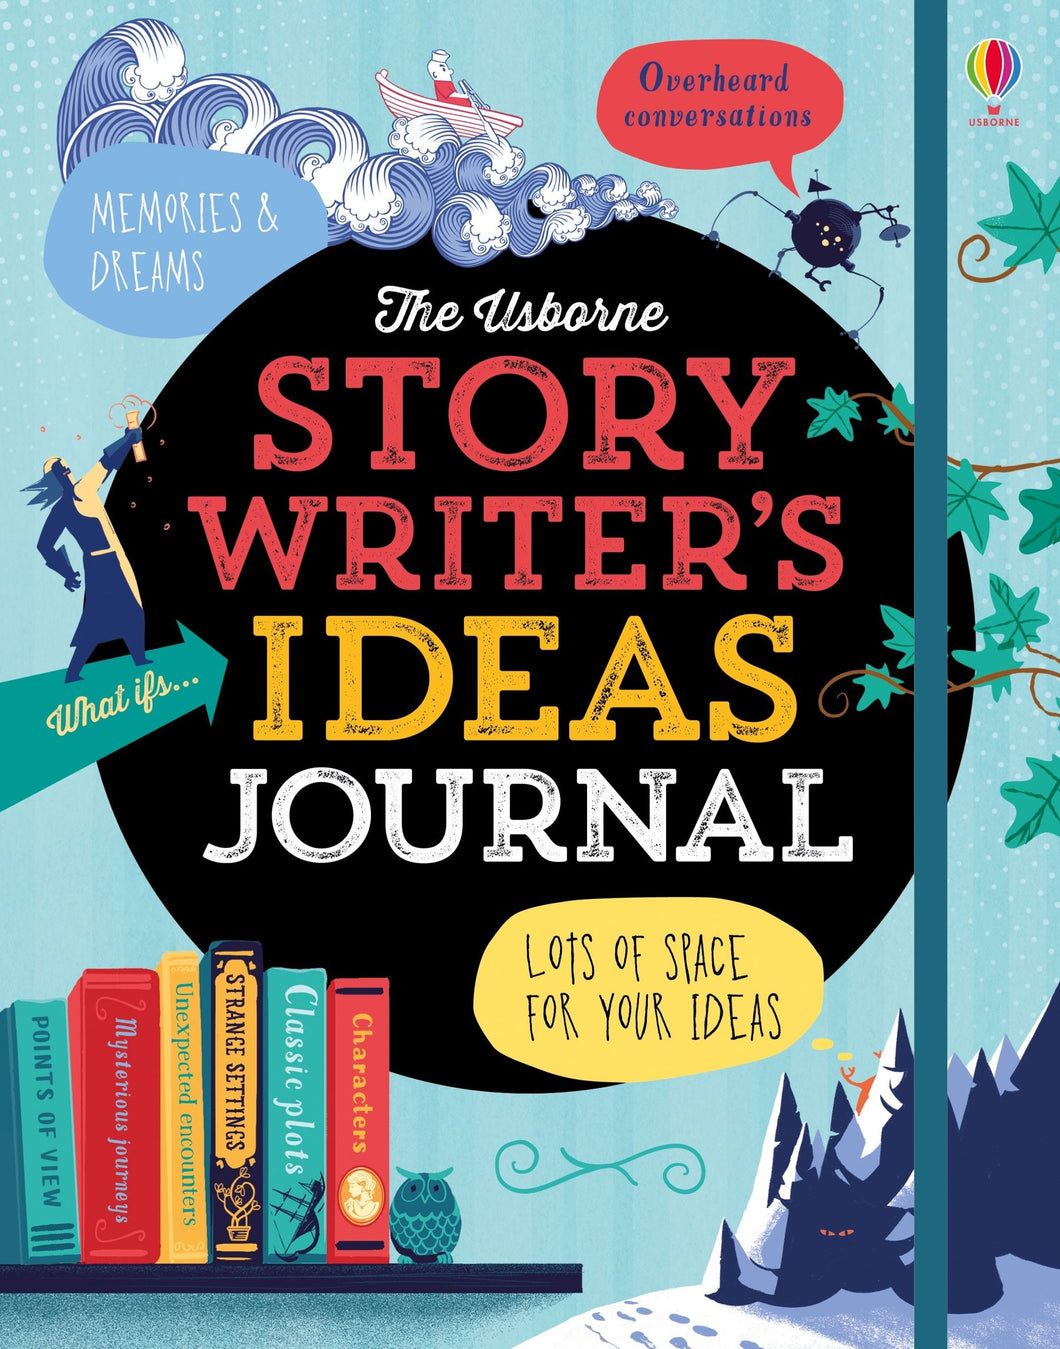 Story Writer's Ideas Journal